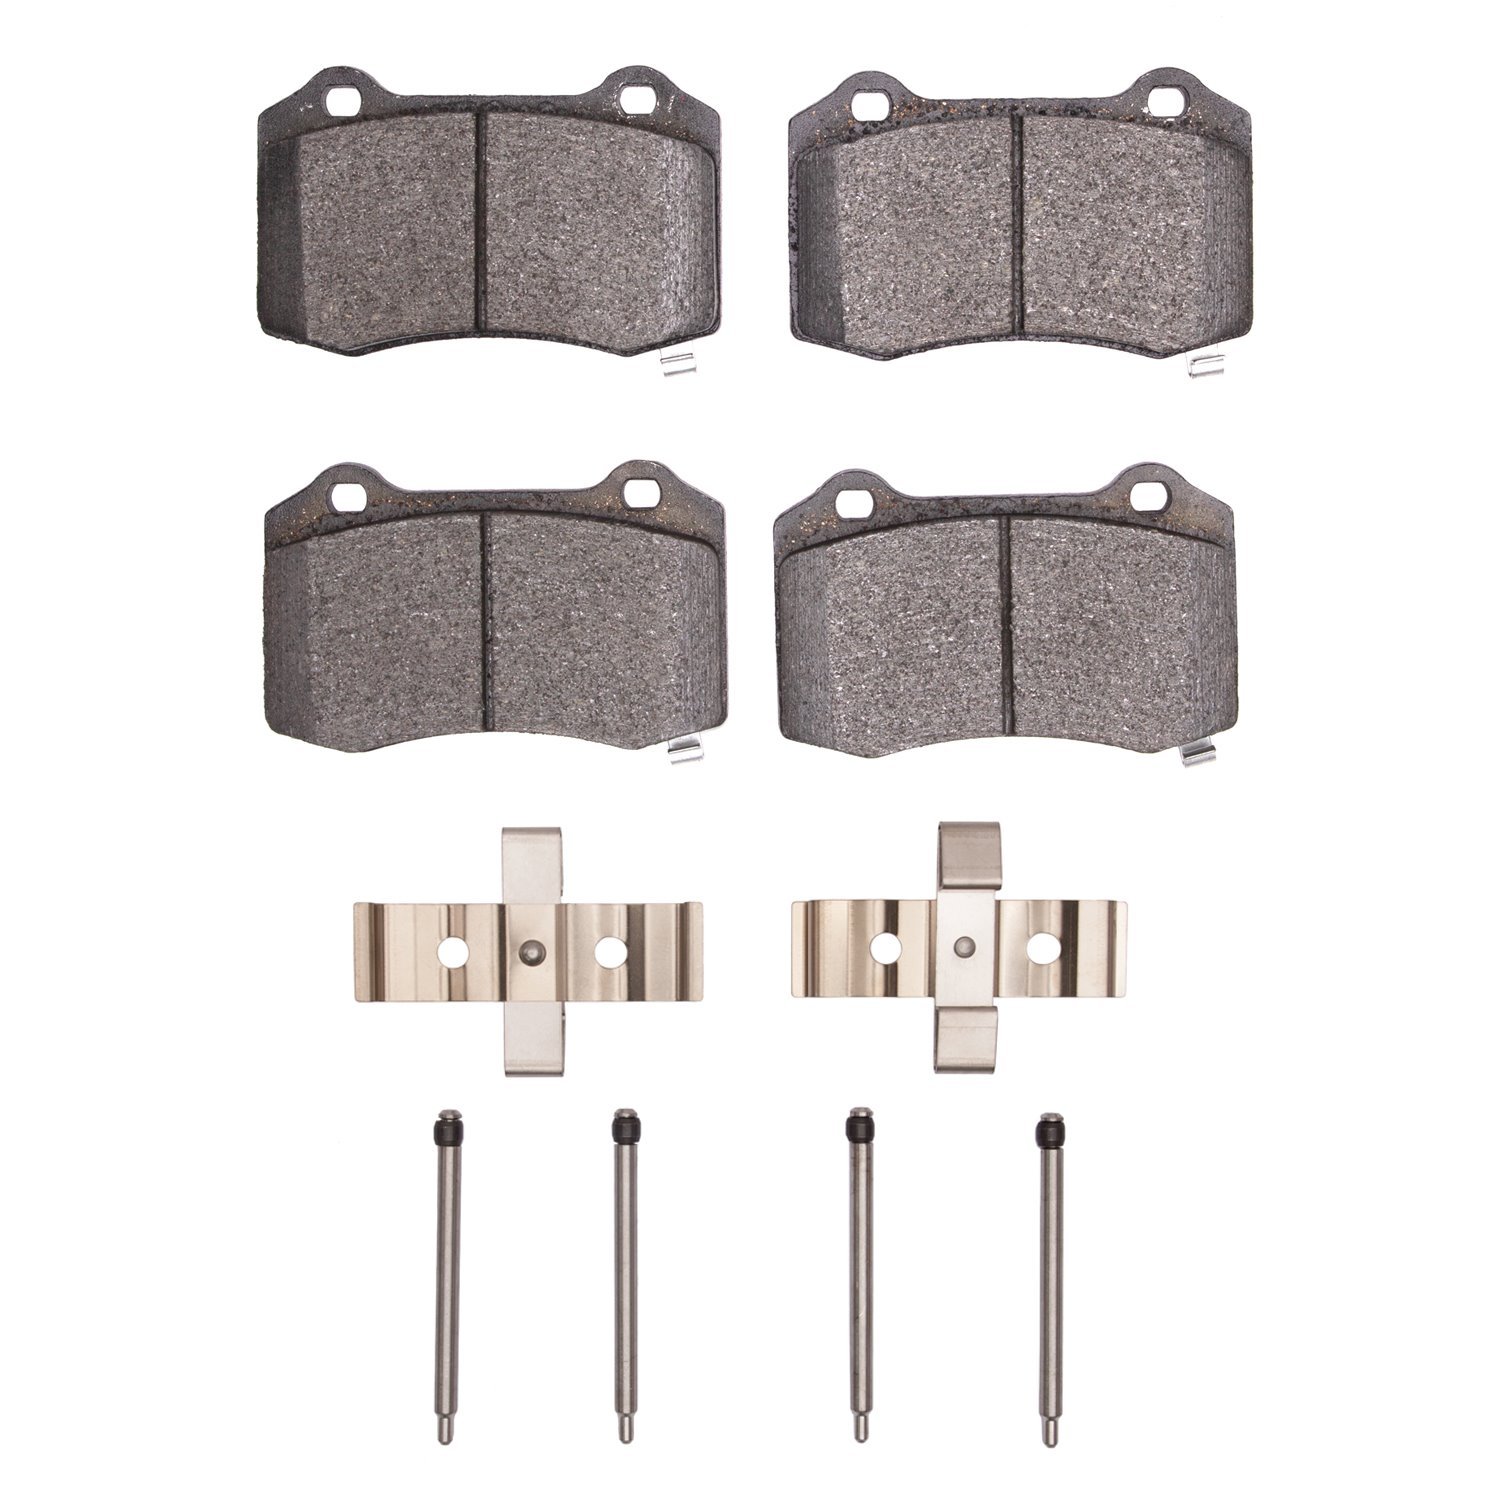 Euro Ceramic Brake Pads & Hardware Kit, Fits Select Fits Multiple Makes/Models, Position: Rear